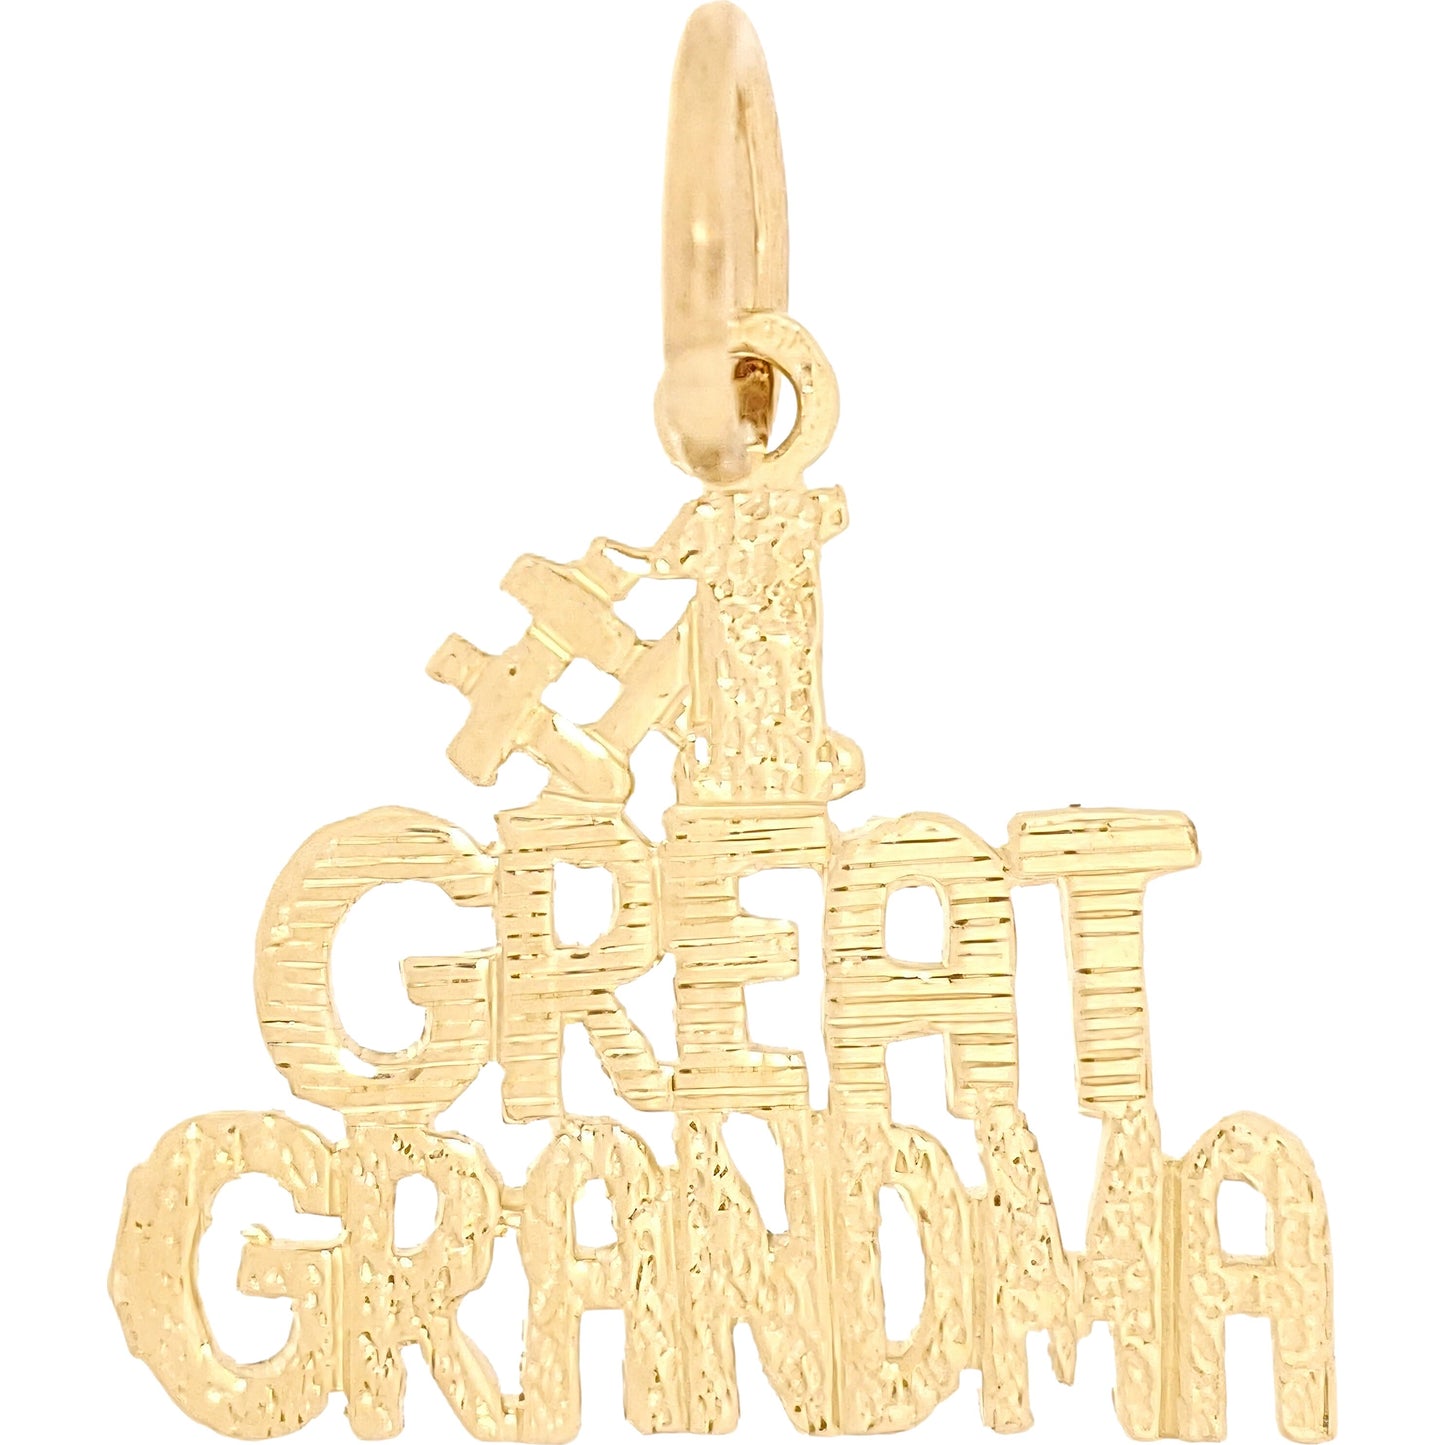 #1 Great Grandma Charm 16.5mm & 18" Chain 14k Gold